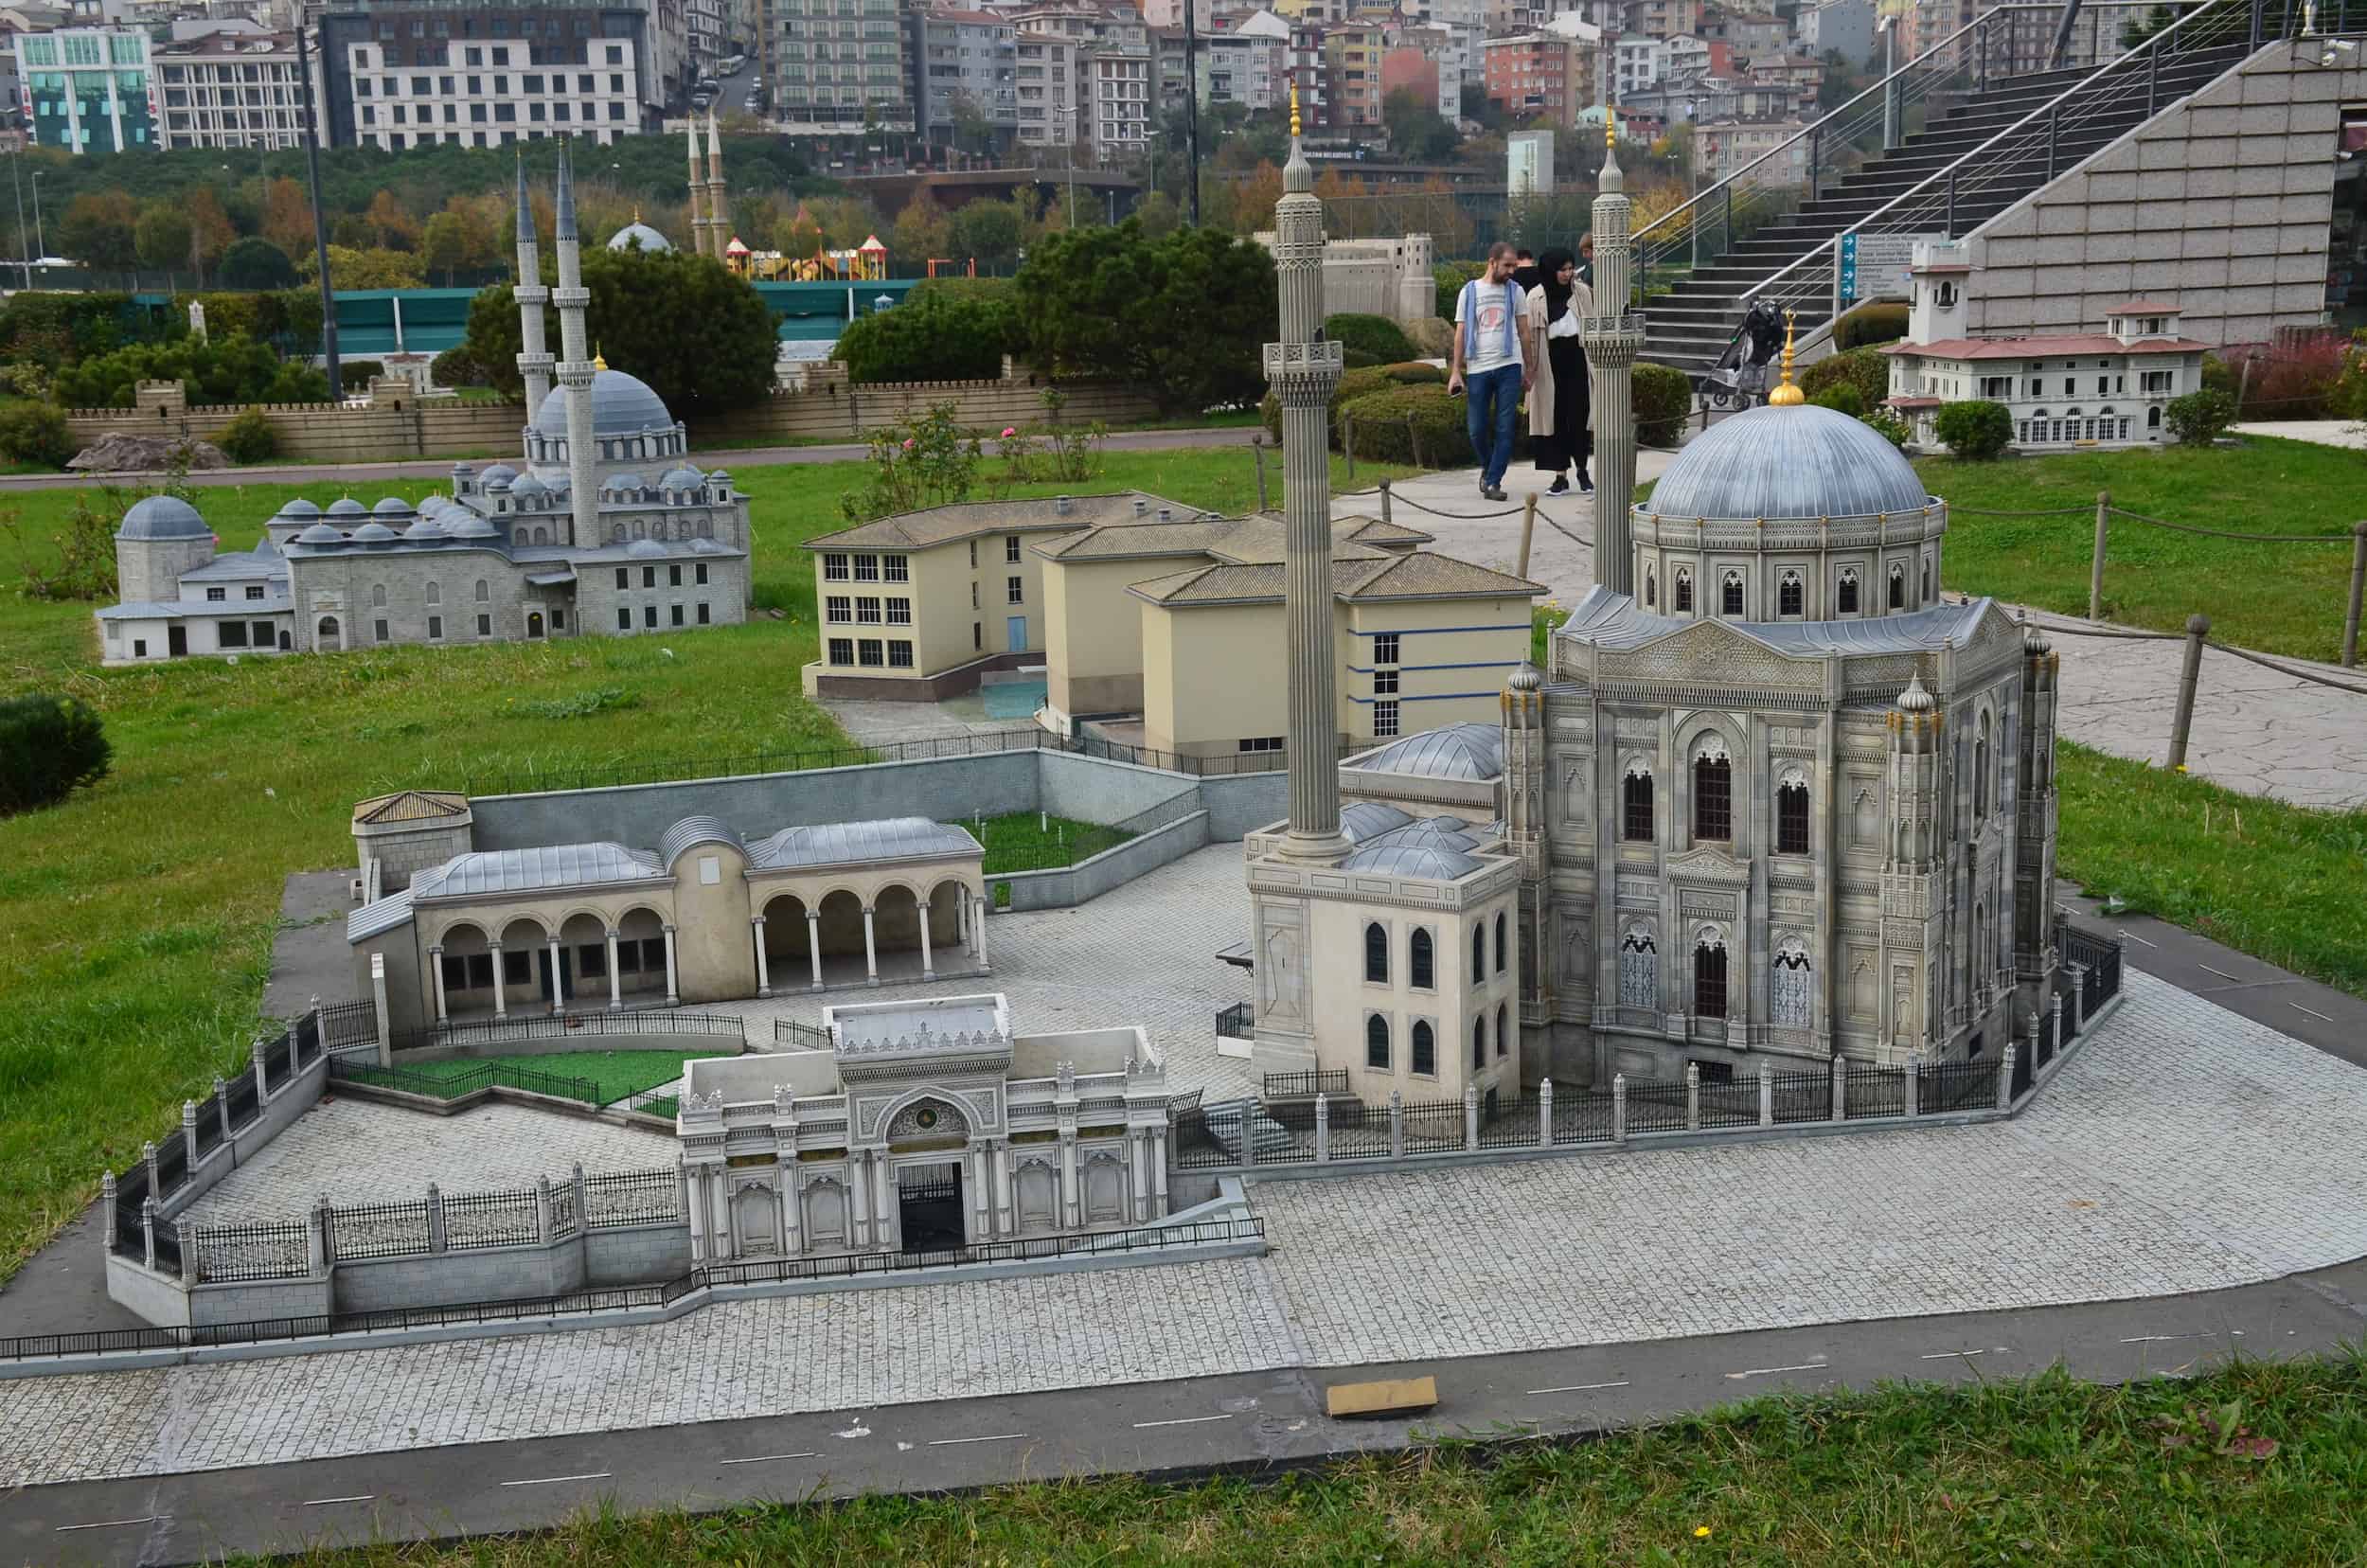 Model of the Valide Sultan Mosque, Aksaray, 19th century at Miniatürk in Istanbul, Turkey